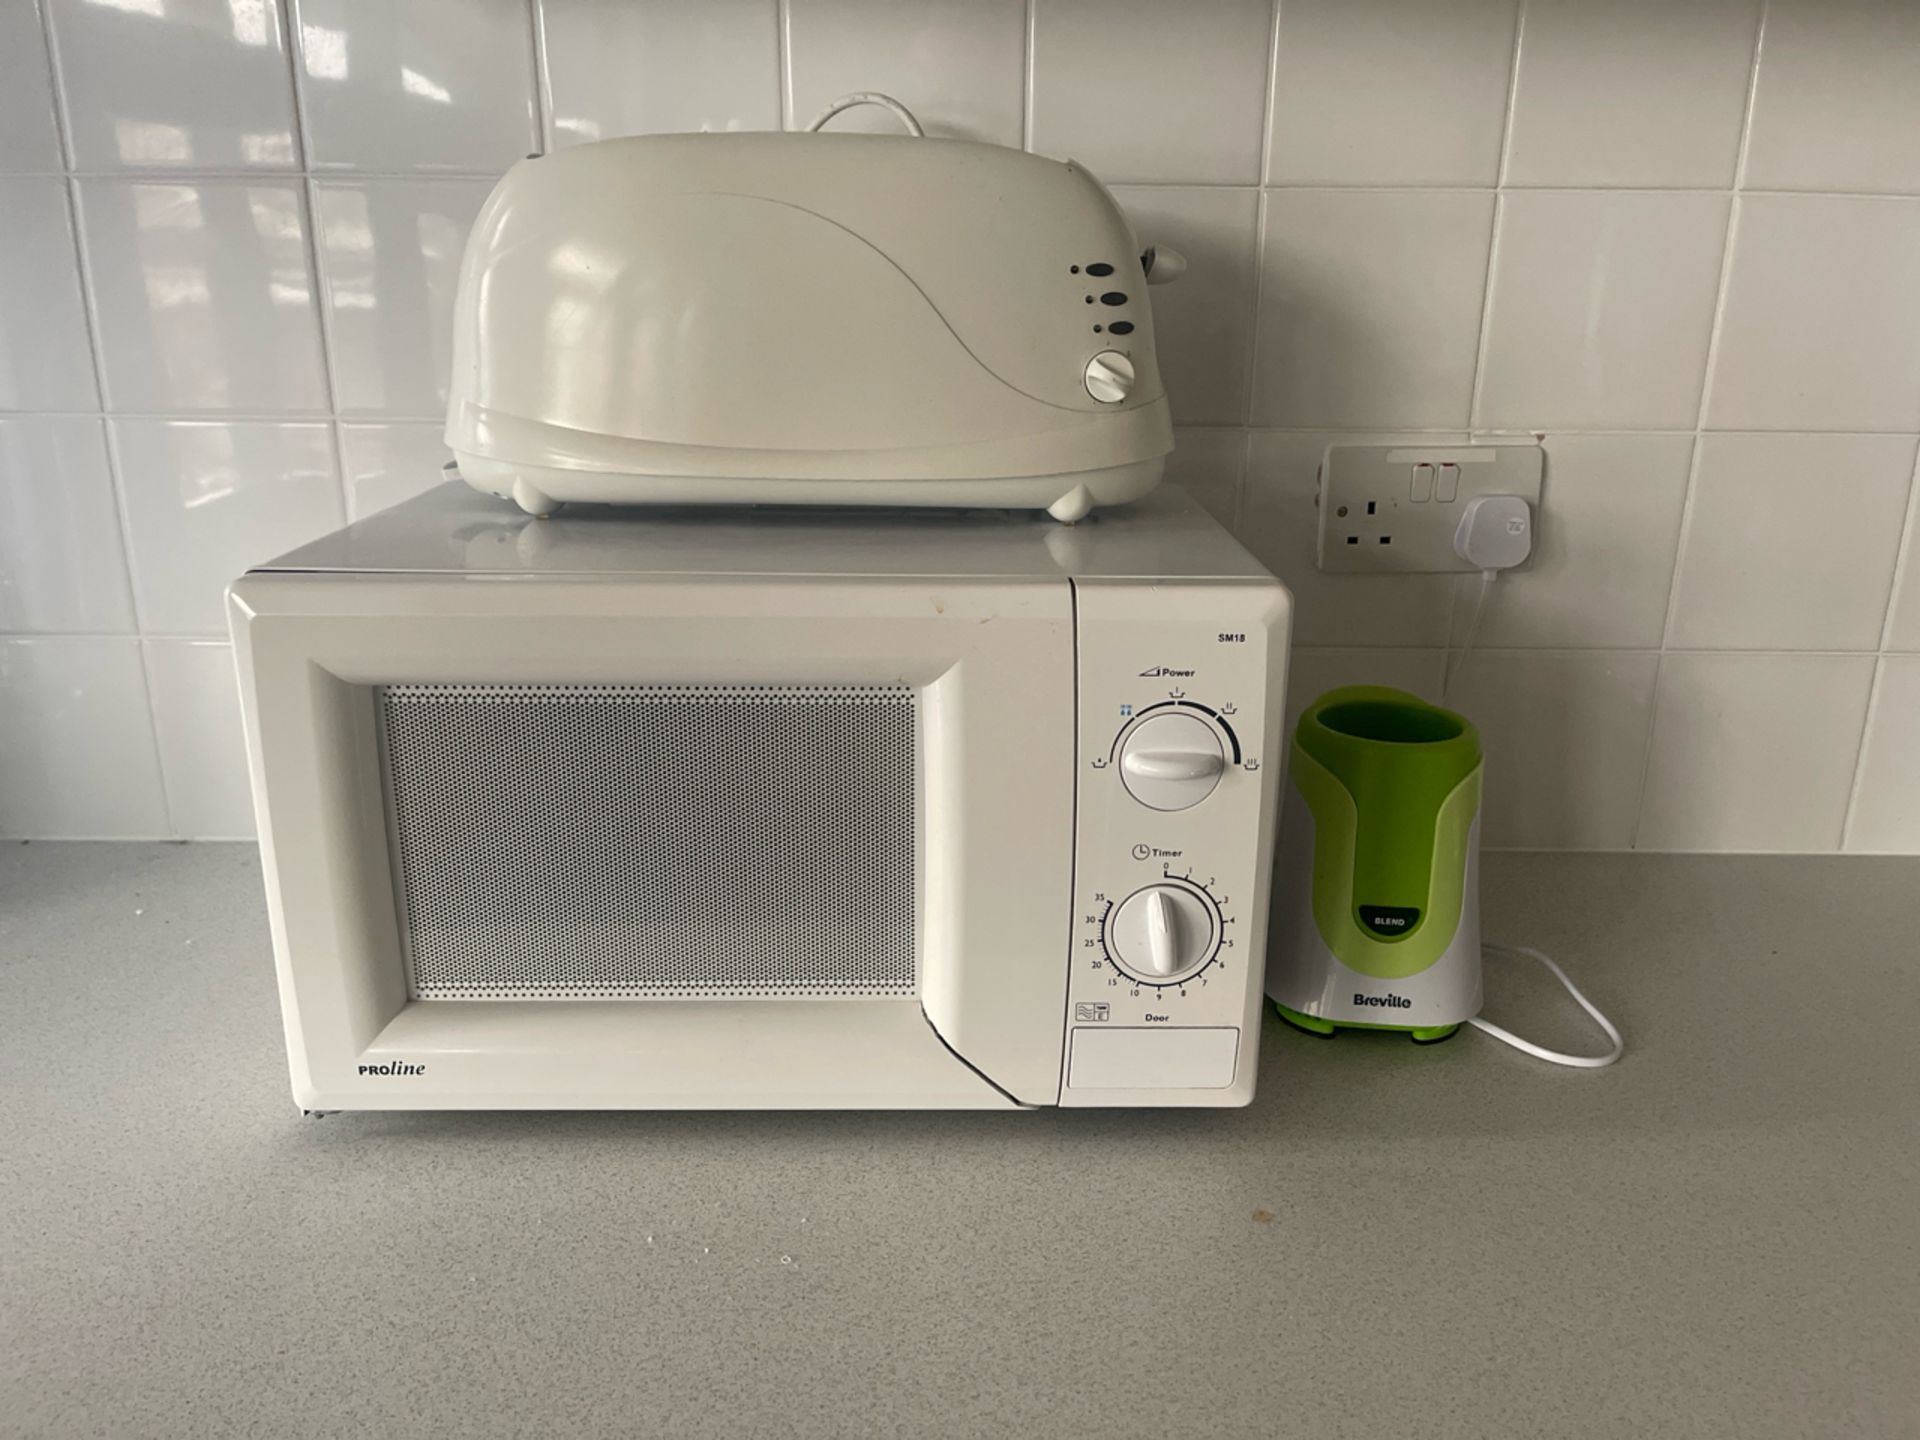 Microwave, Toaster & Blender